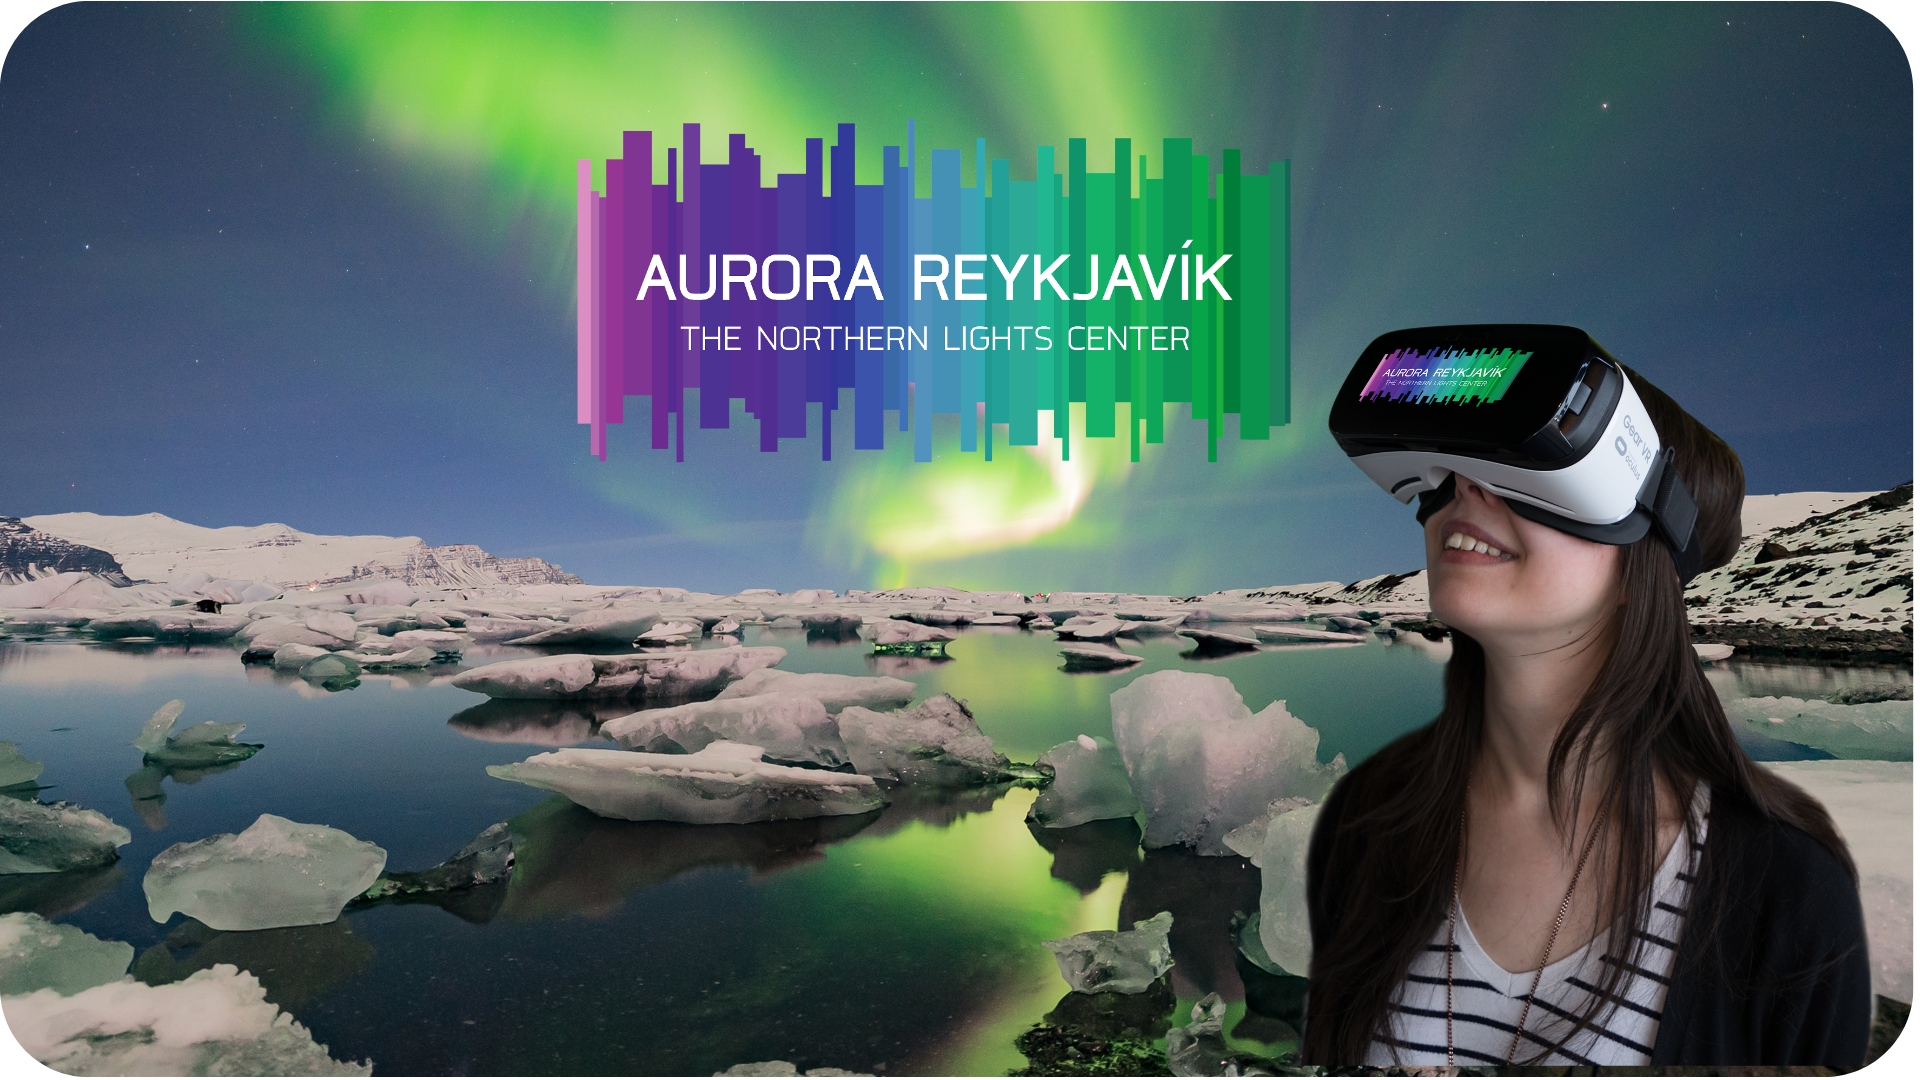 World's first northern lights VR experience -exclusively at Aurora Reykjavík